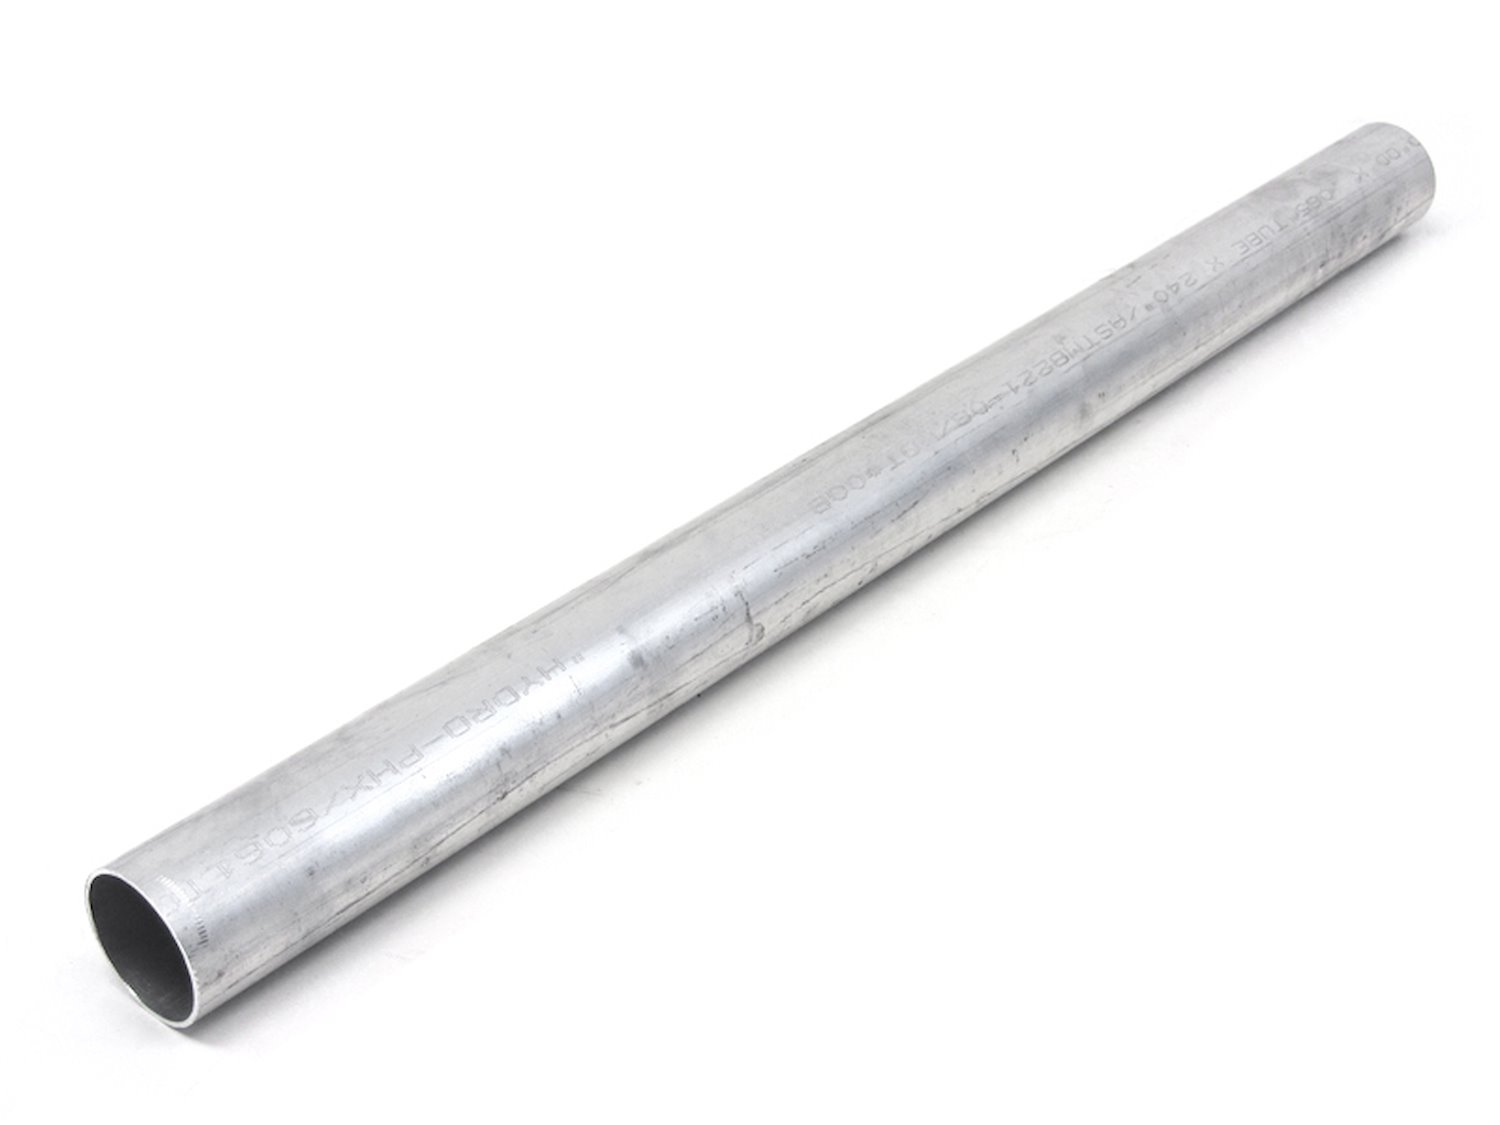 AST-3F-275 Aluminum Tubing, 6061 Aluminum, Straight Tubing, 2-3/4 in. OD, Seamless, Raw Finish, 3 ft. Long